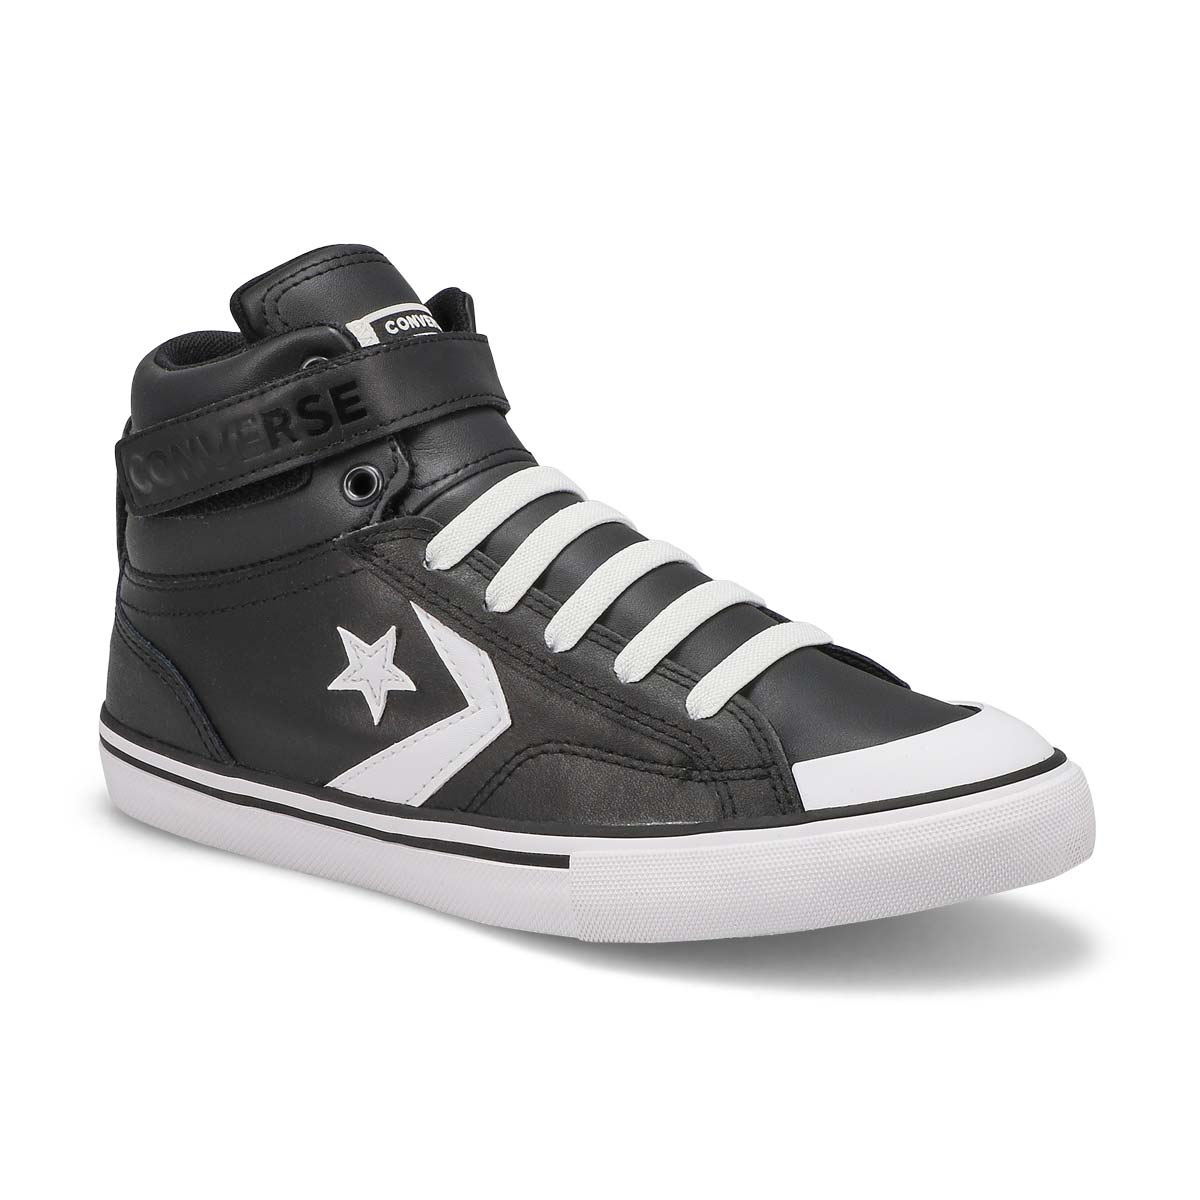 Boys' Chuck Taylor All Star Pro Blaze Strap Leather Sneaker - Black/White